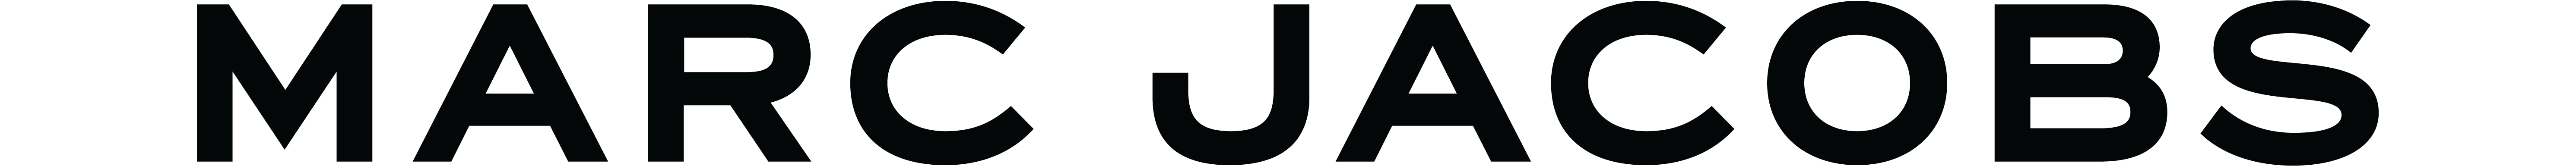 Marc Jacobs Logo - Marc Jacobs | Official Site